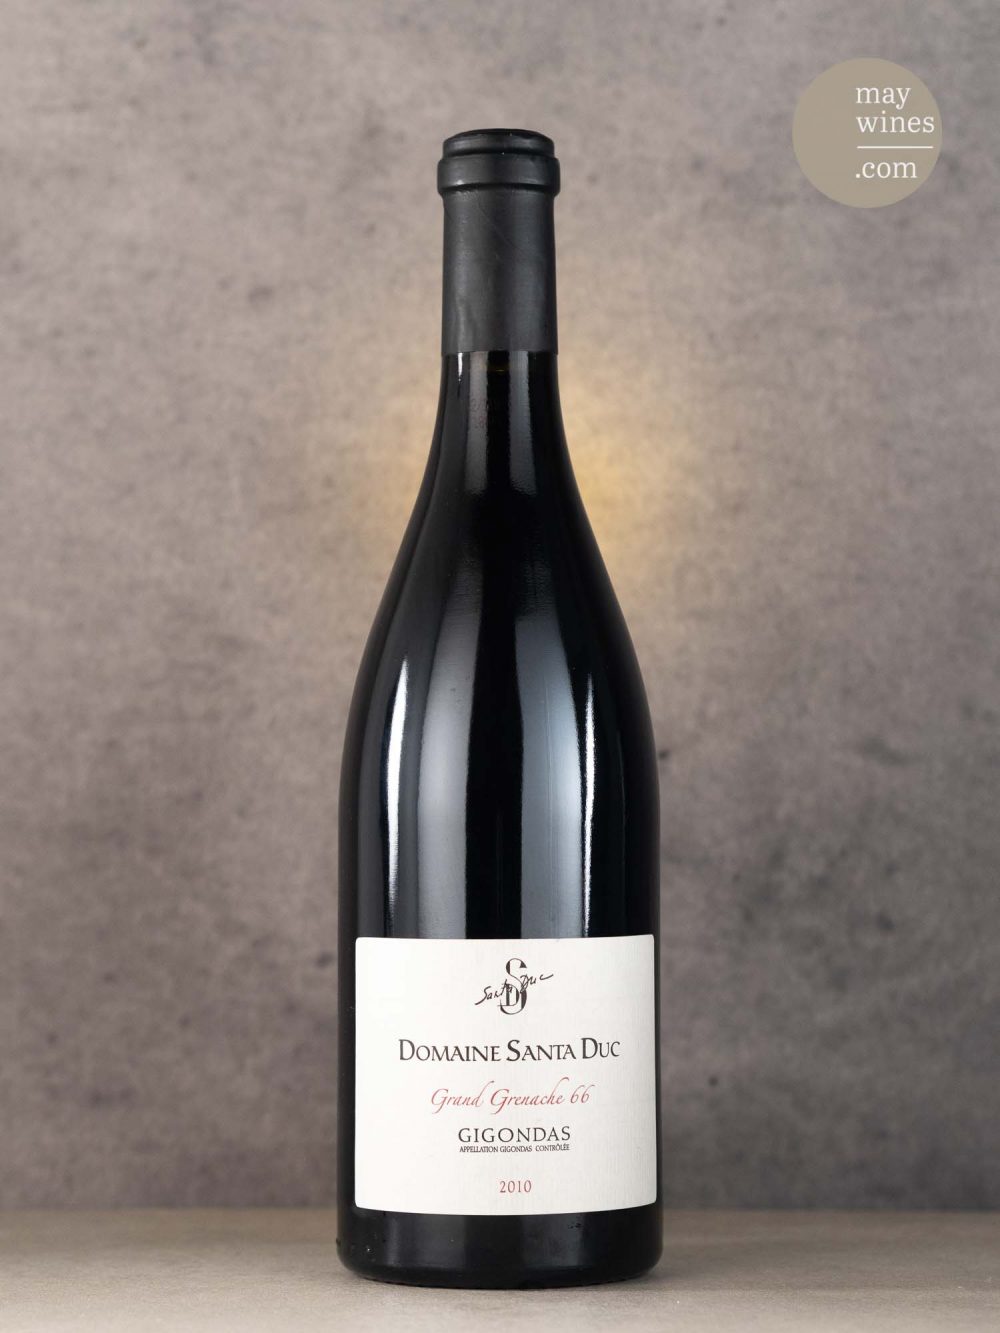 May Wines – Rotwein – 2010 Grand Grenache 66 - Domaine Santa Duc